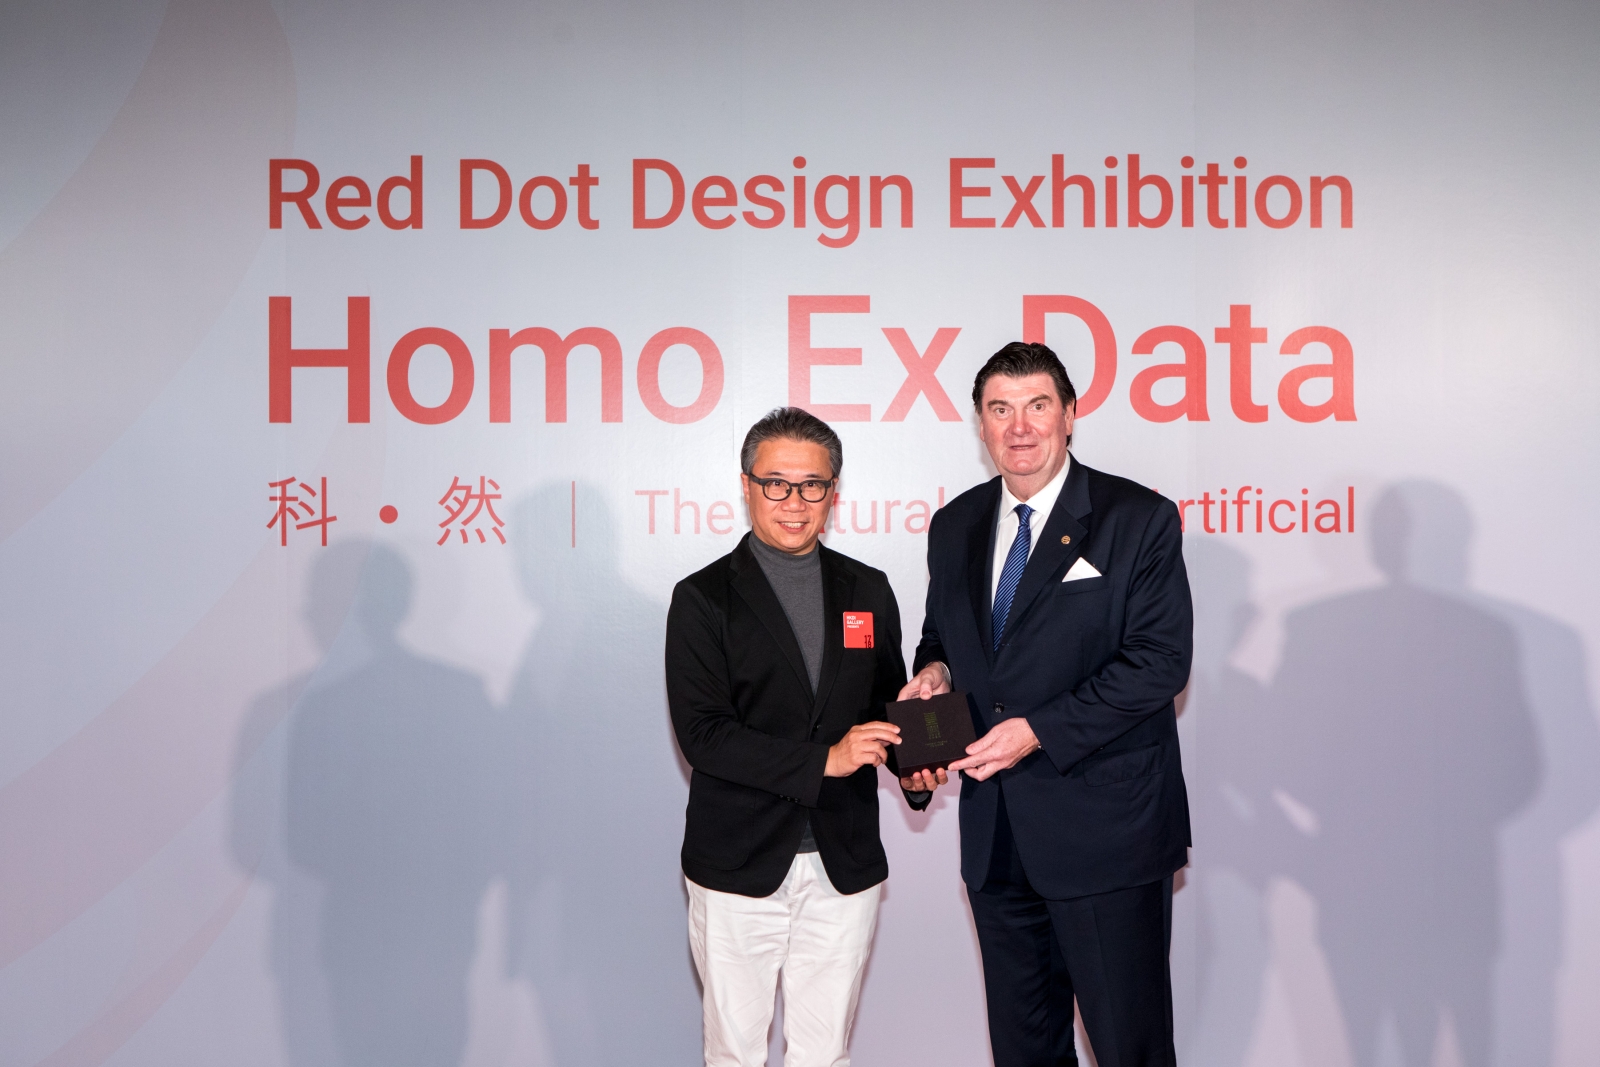 HKDI Gallery Presents紅點設計《科 • 然》主題展覽
【Homo Ex Data – The Natural of the Artificial】
 邁向未來數碼時代的科技創新與影響